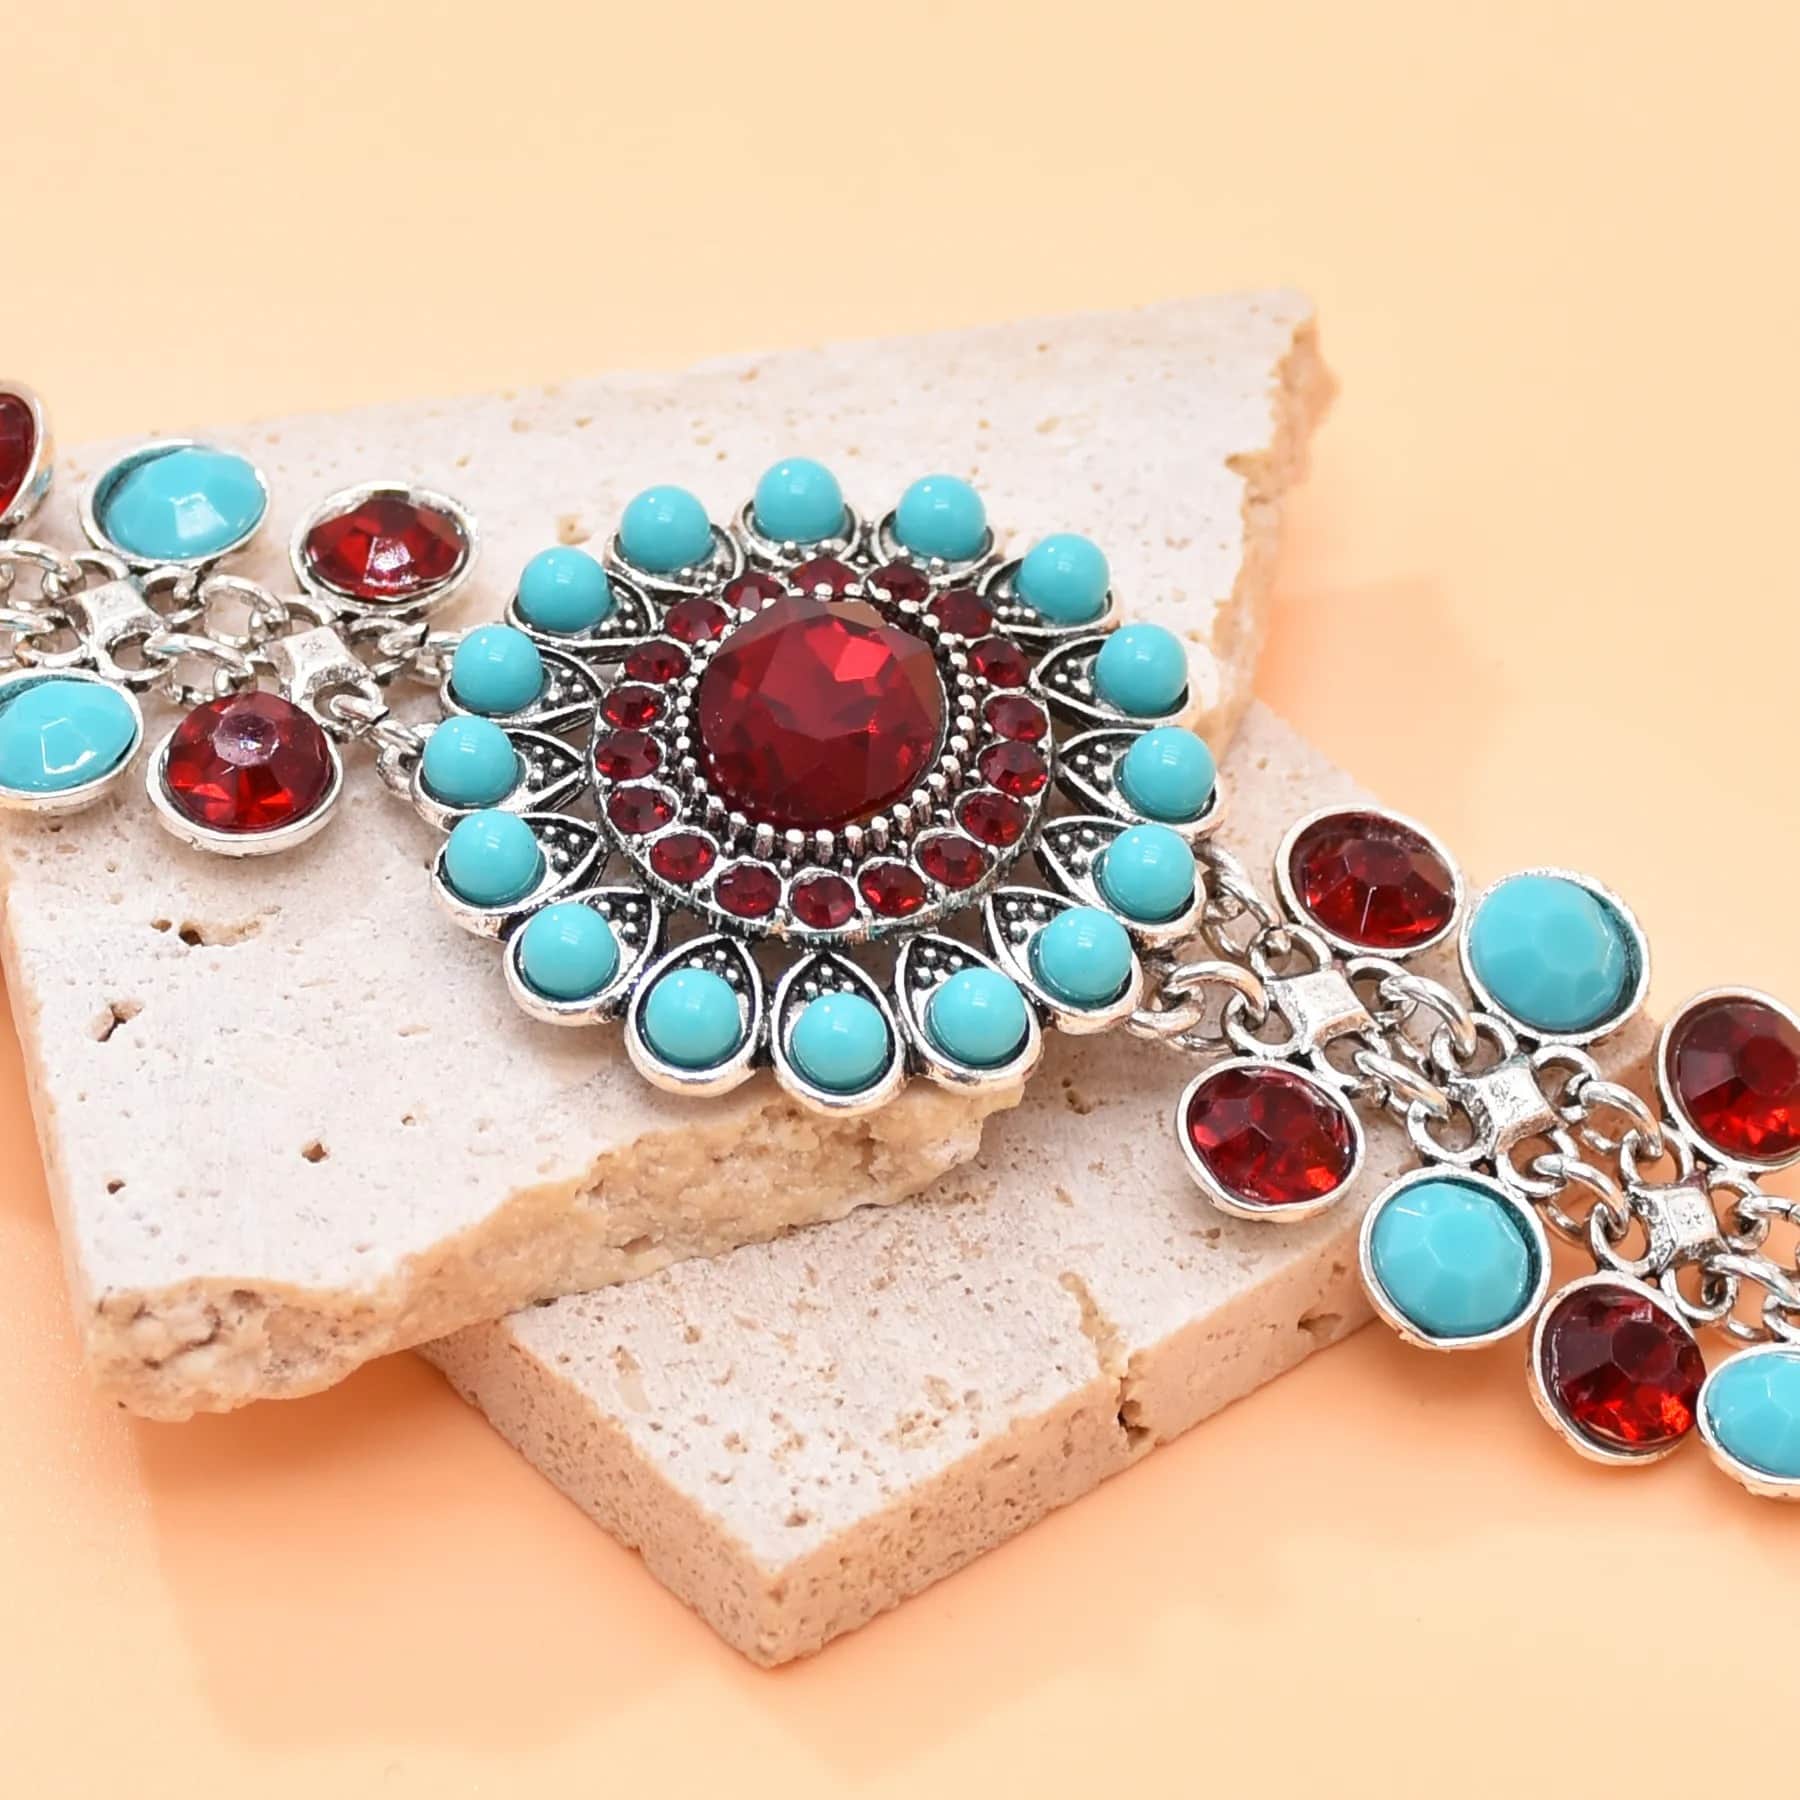 Bratara argintie, cu pietre bleu si rosii, stil turcesc, Maddie C10